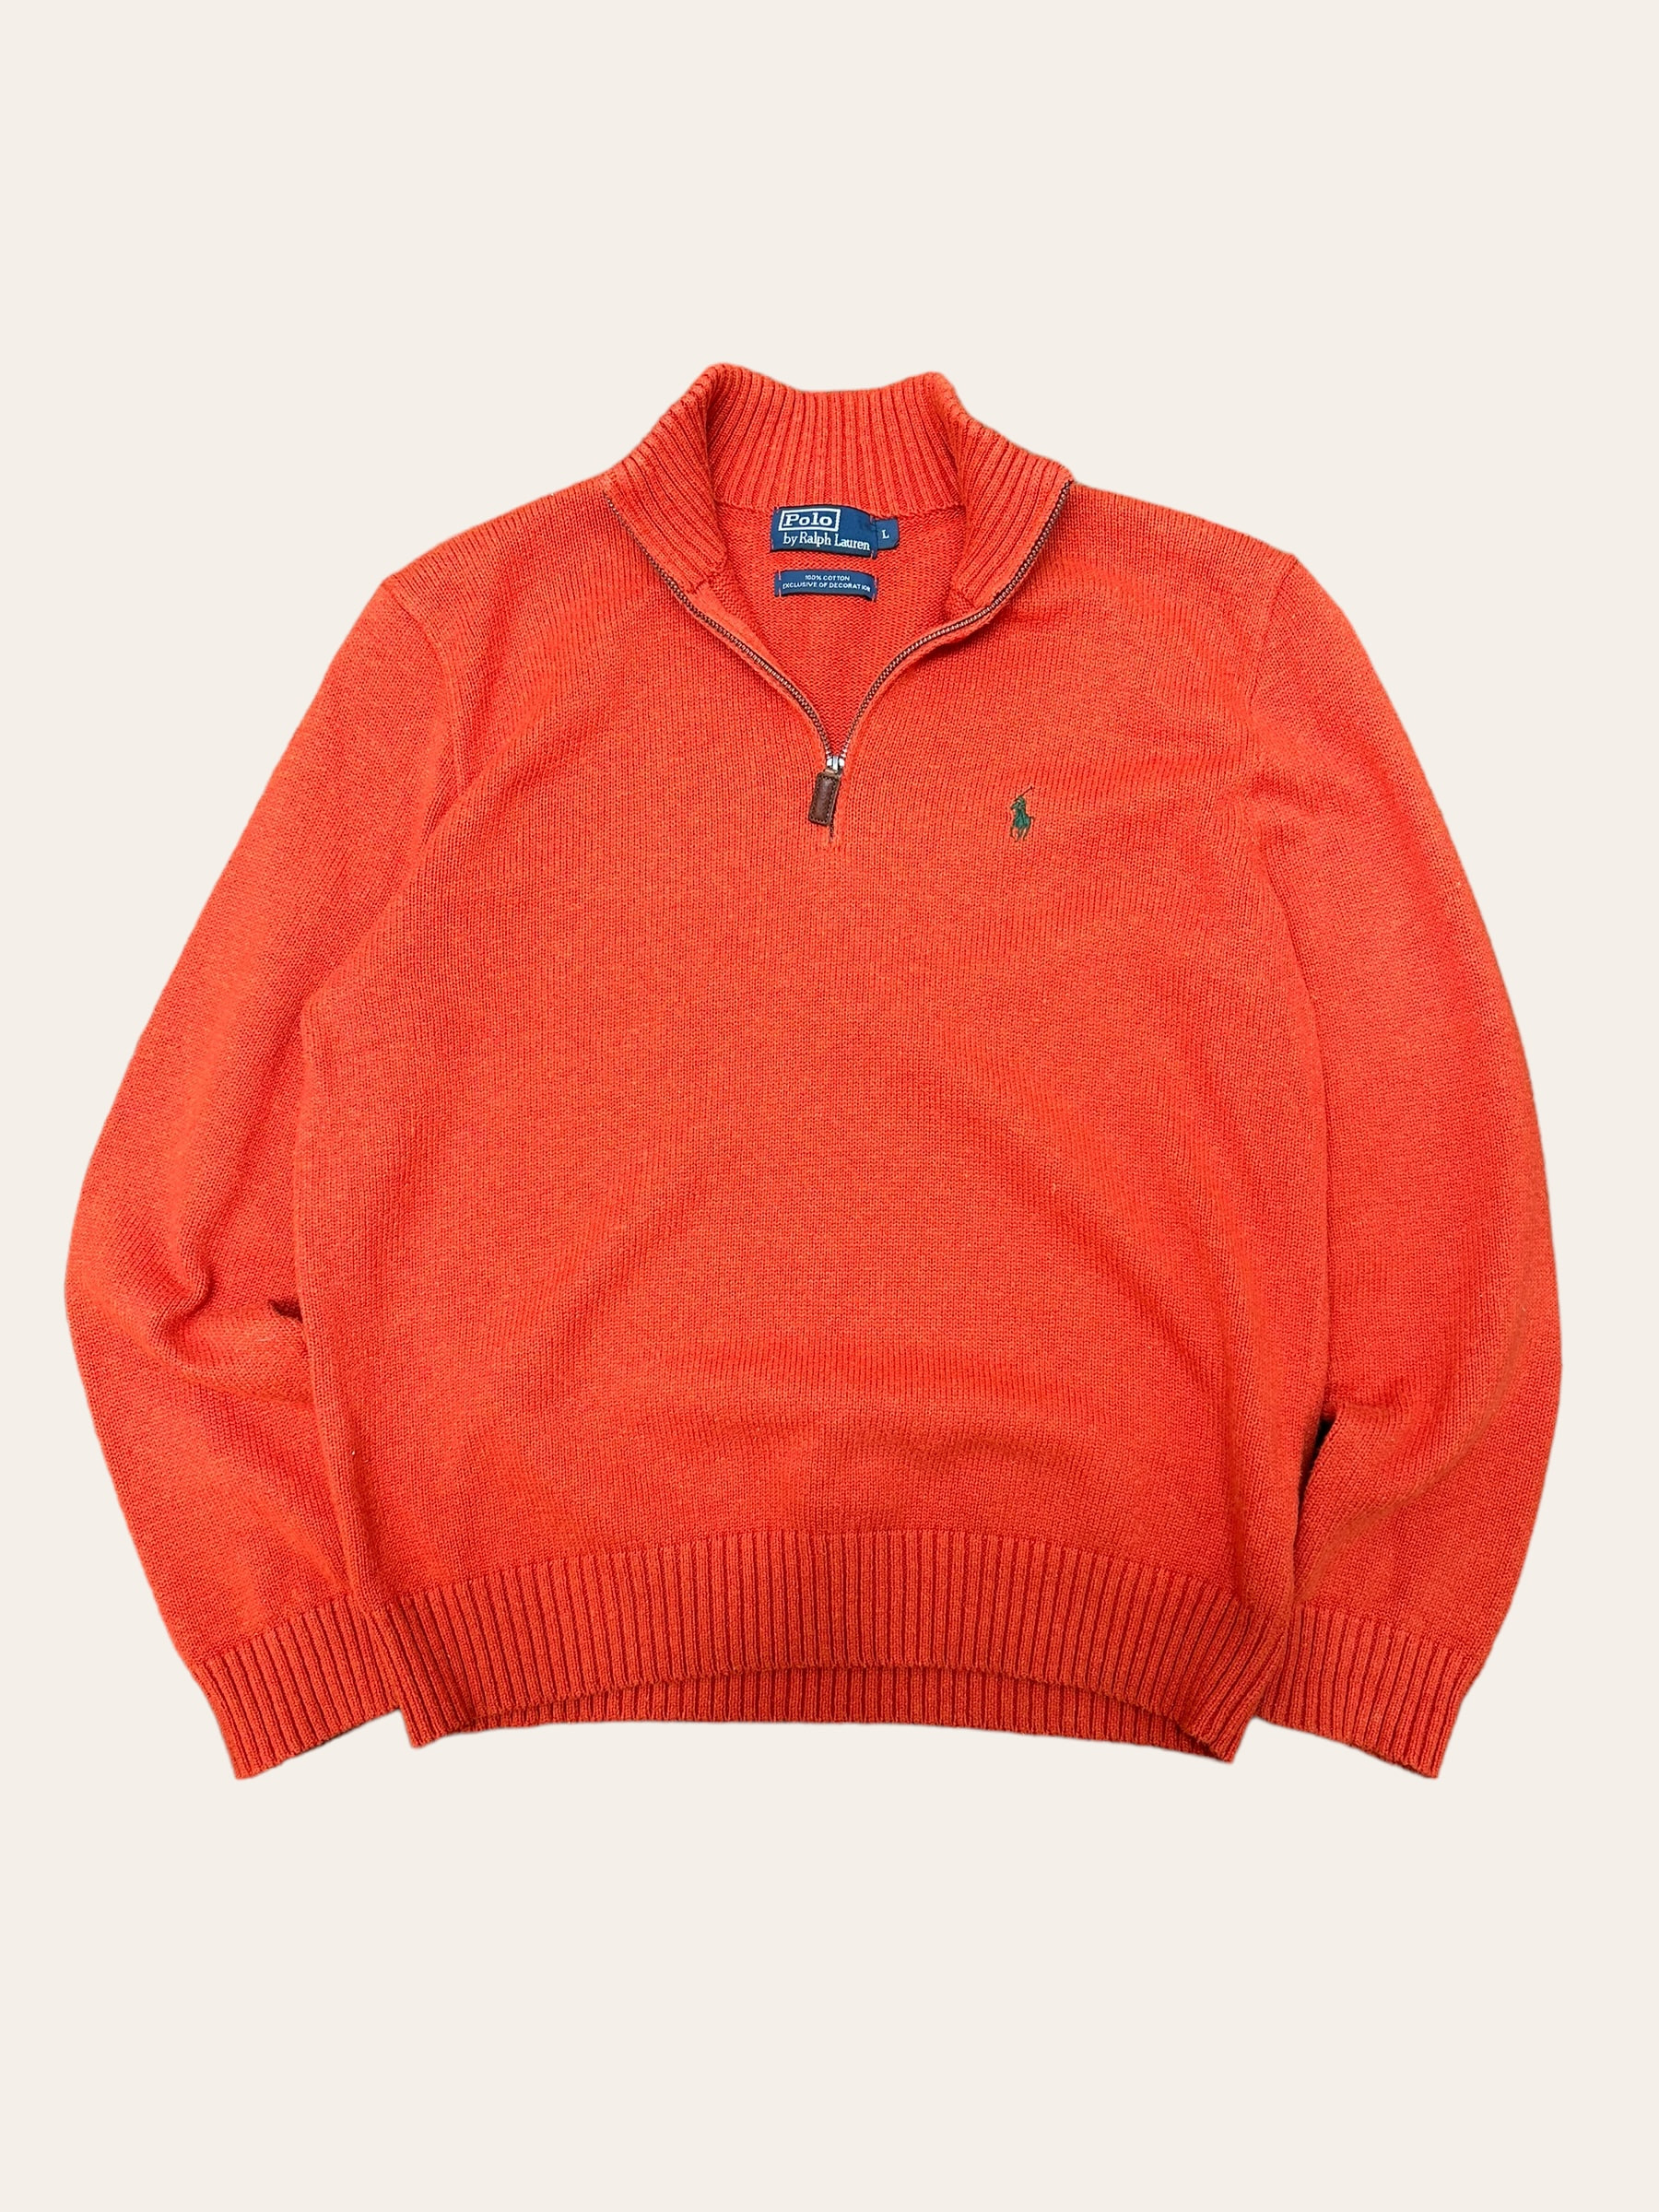 Polo ralph lauren orange cotton pullover L